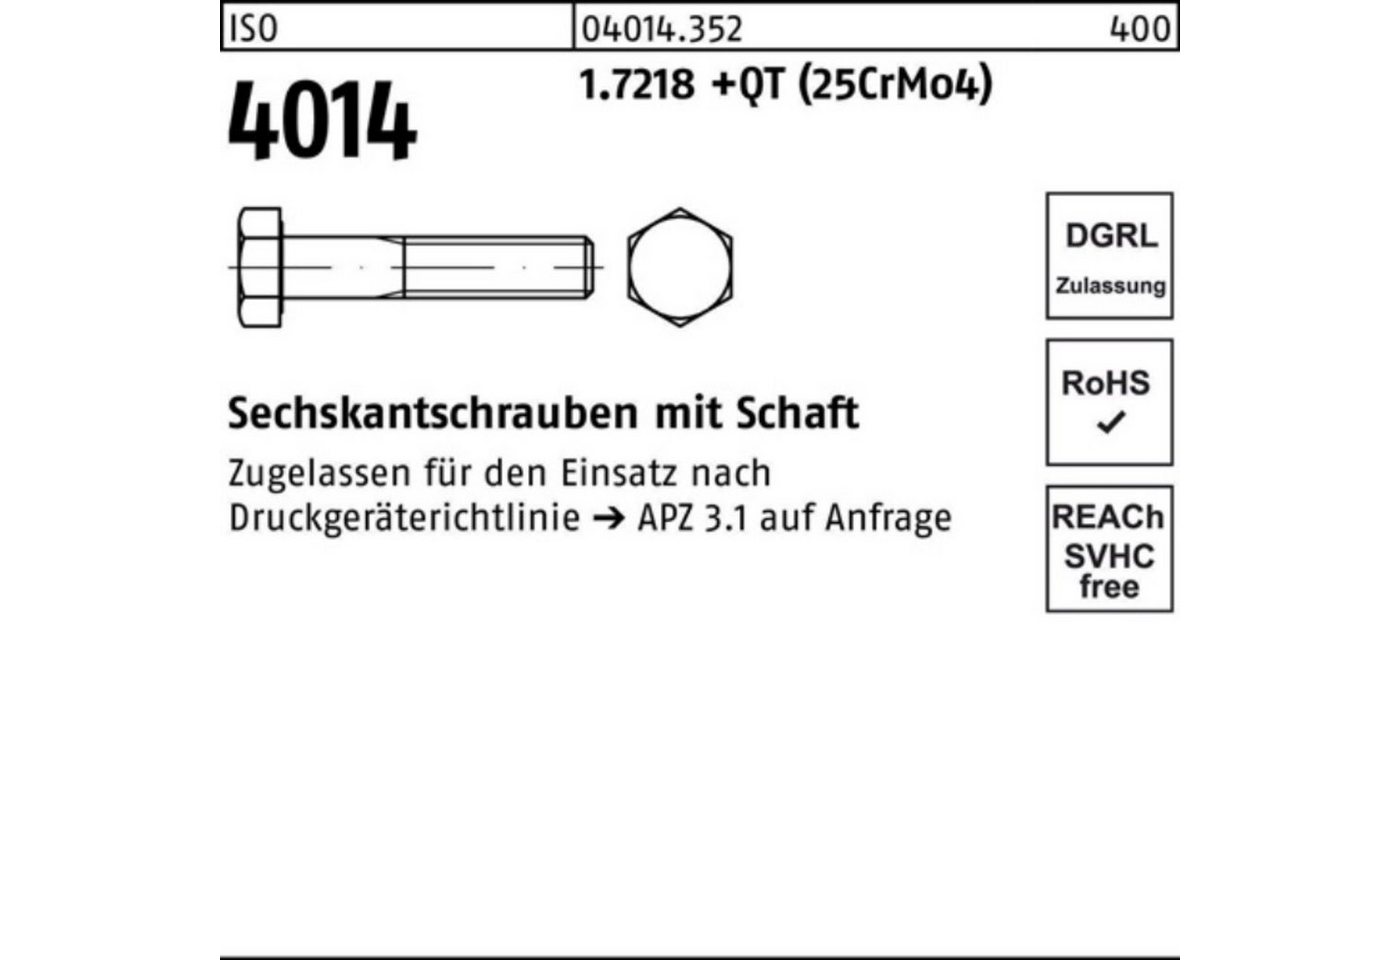 Bufab Sechskantschraube 100er Pack Sechskantschraube ISO 4014 Schaft M30x 180 1.7218 +QT (25Cr von Bufab